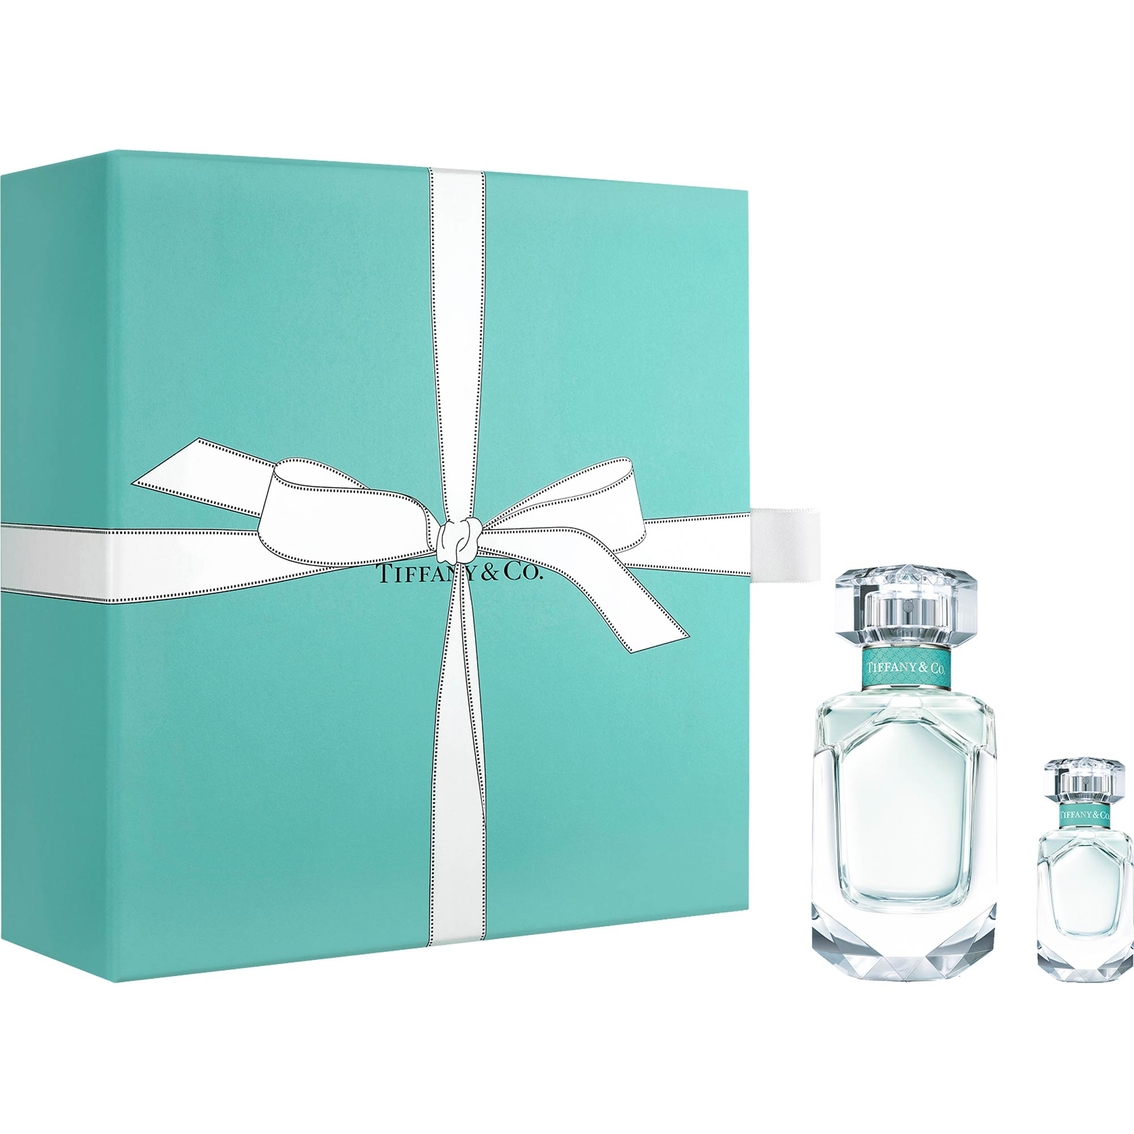 tiffany perfume gift box